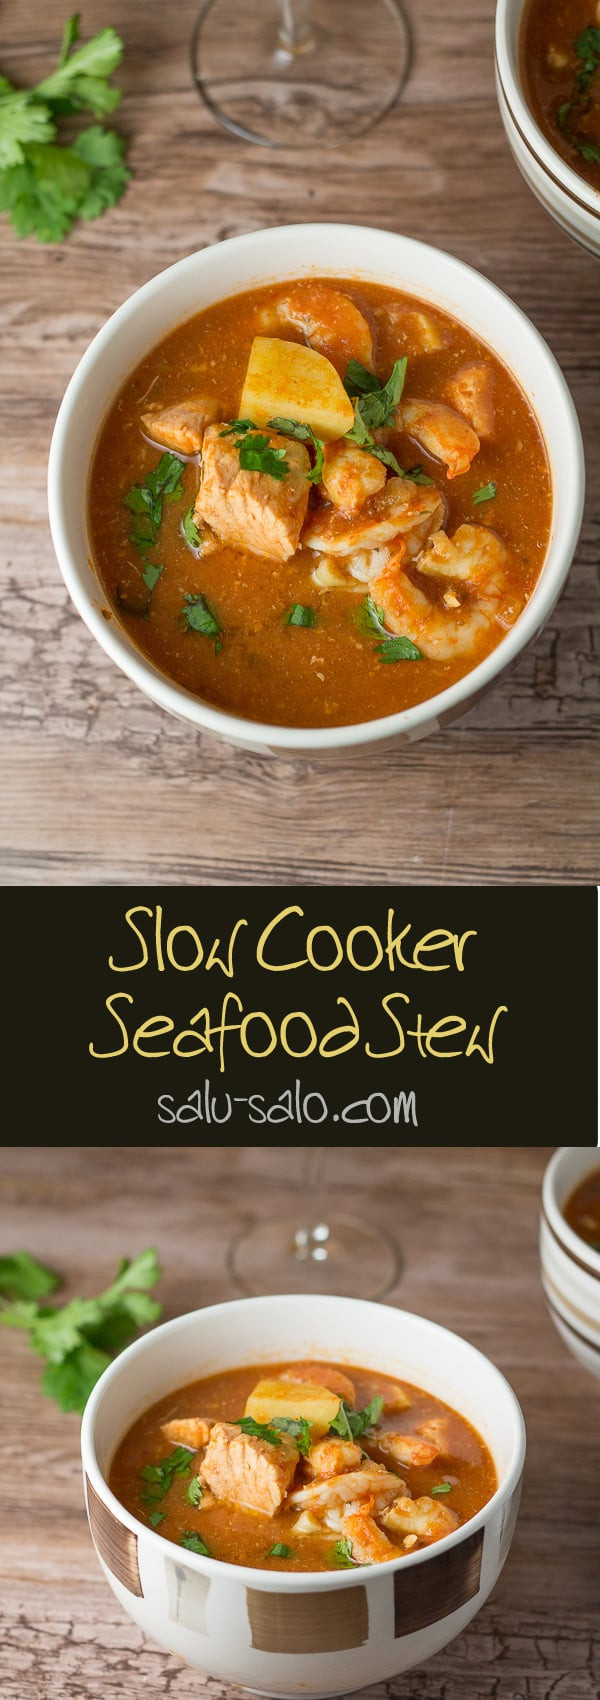 Salmon Stew Slow Cooker
 Slow Cooker Seafood Stew Salu Salo Recipes